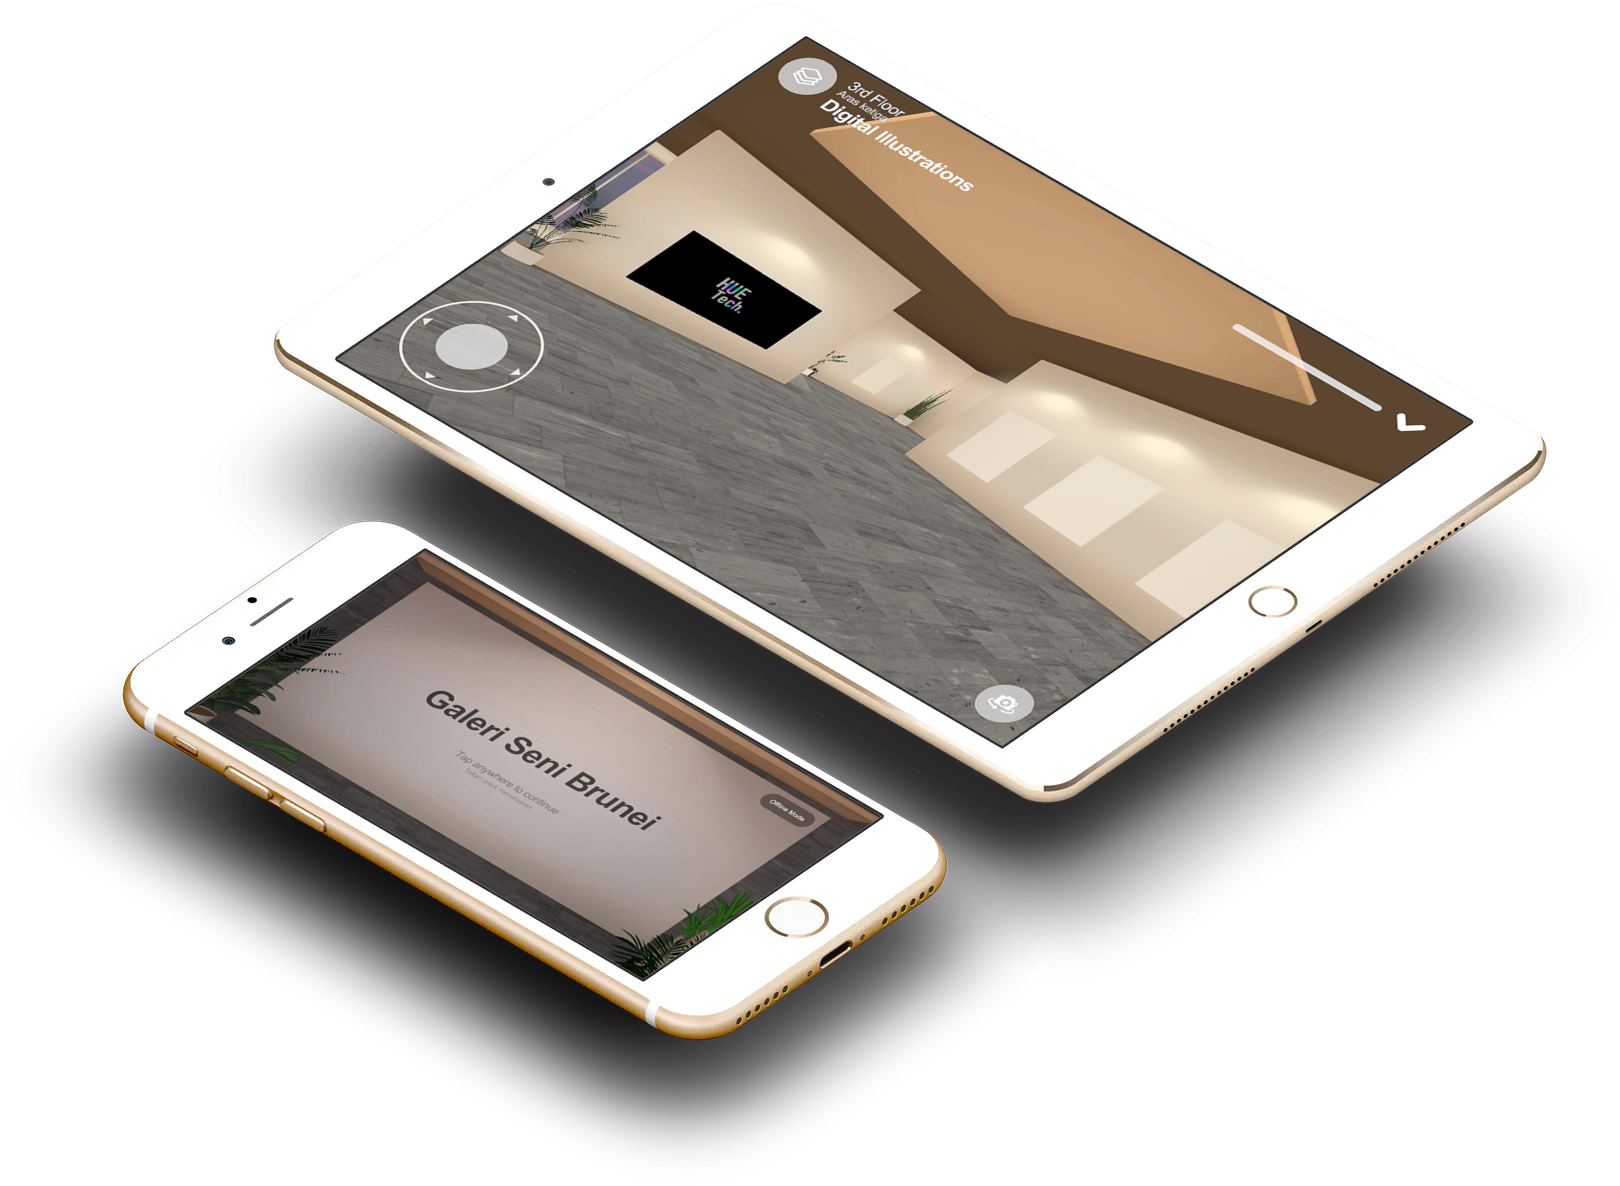 Galeri seni app preview on mobile devices